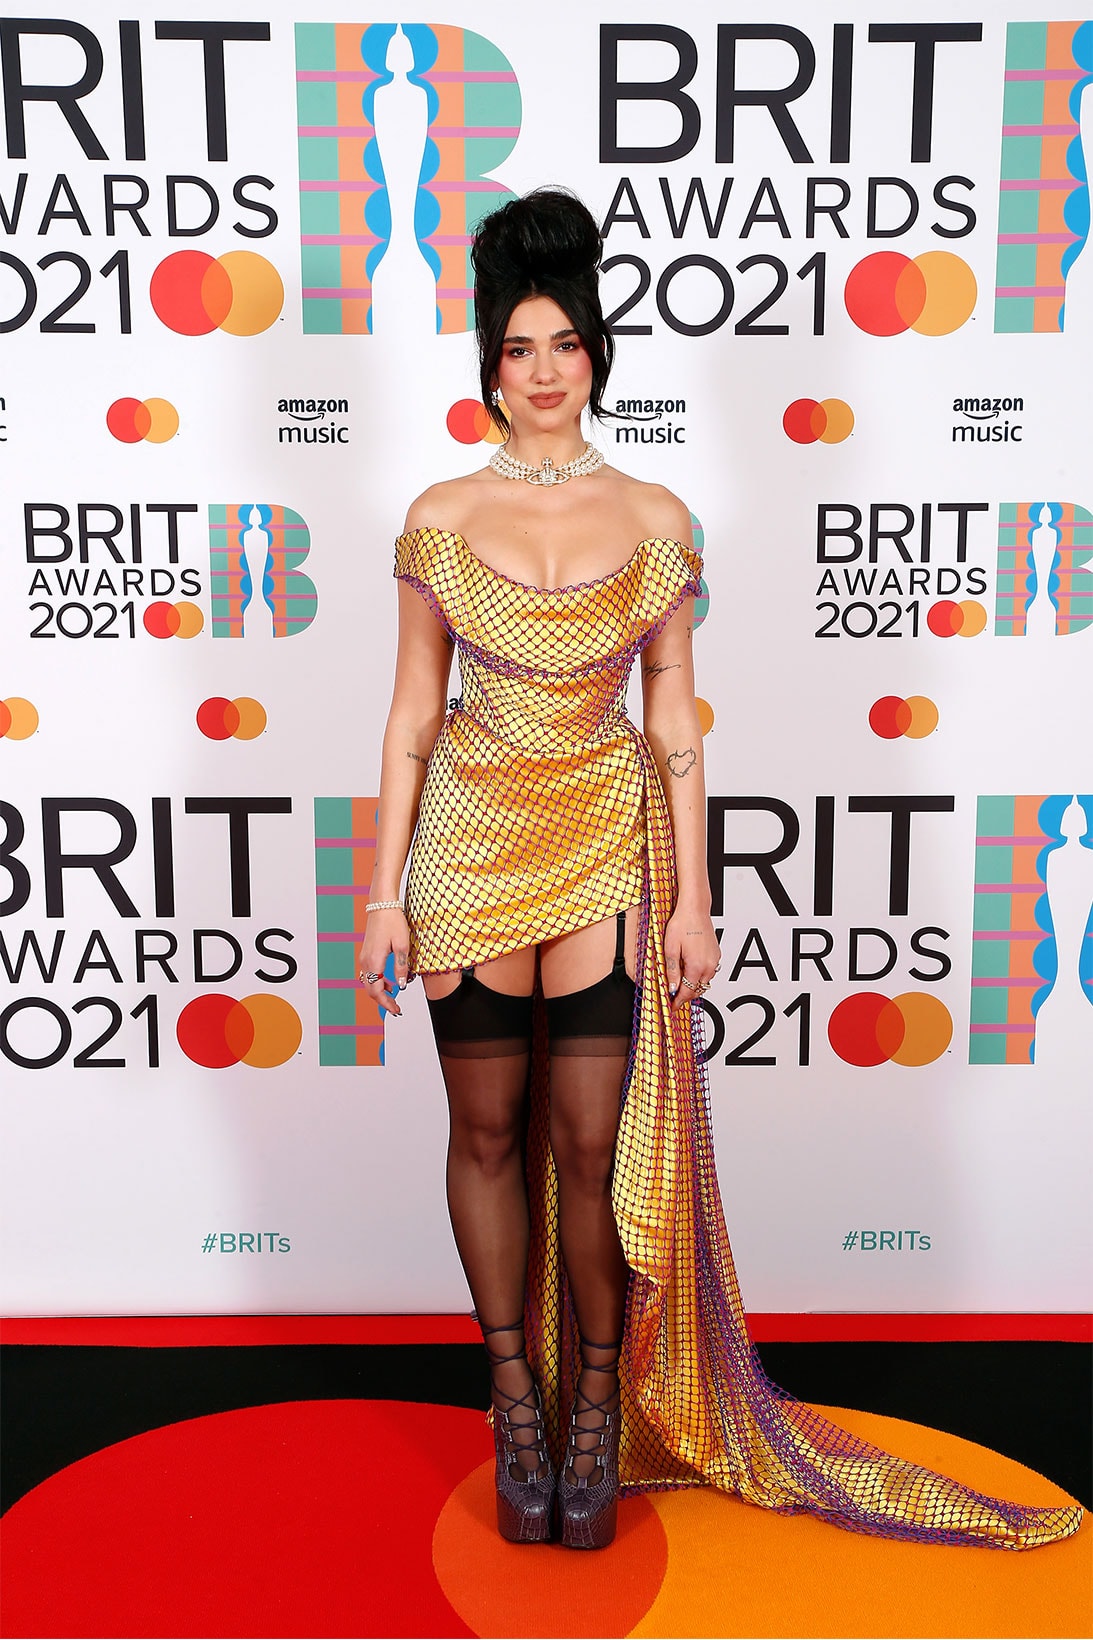 brit awards 2021 red carpet best dressed celebrities dua lipa vivienne westwood